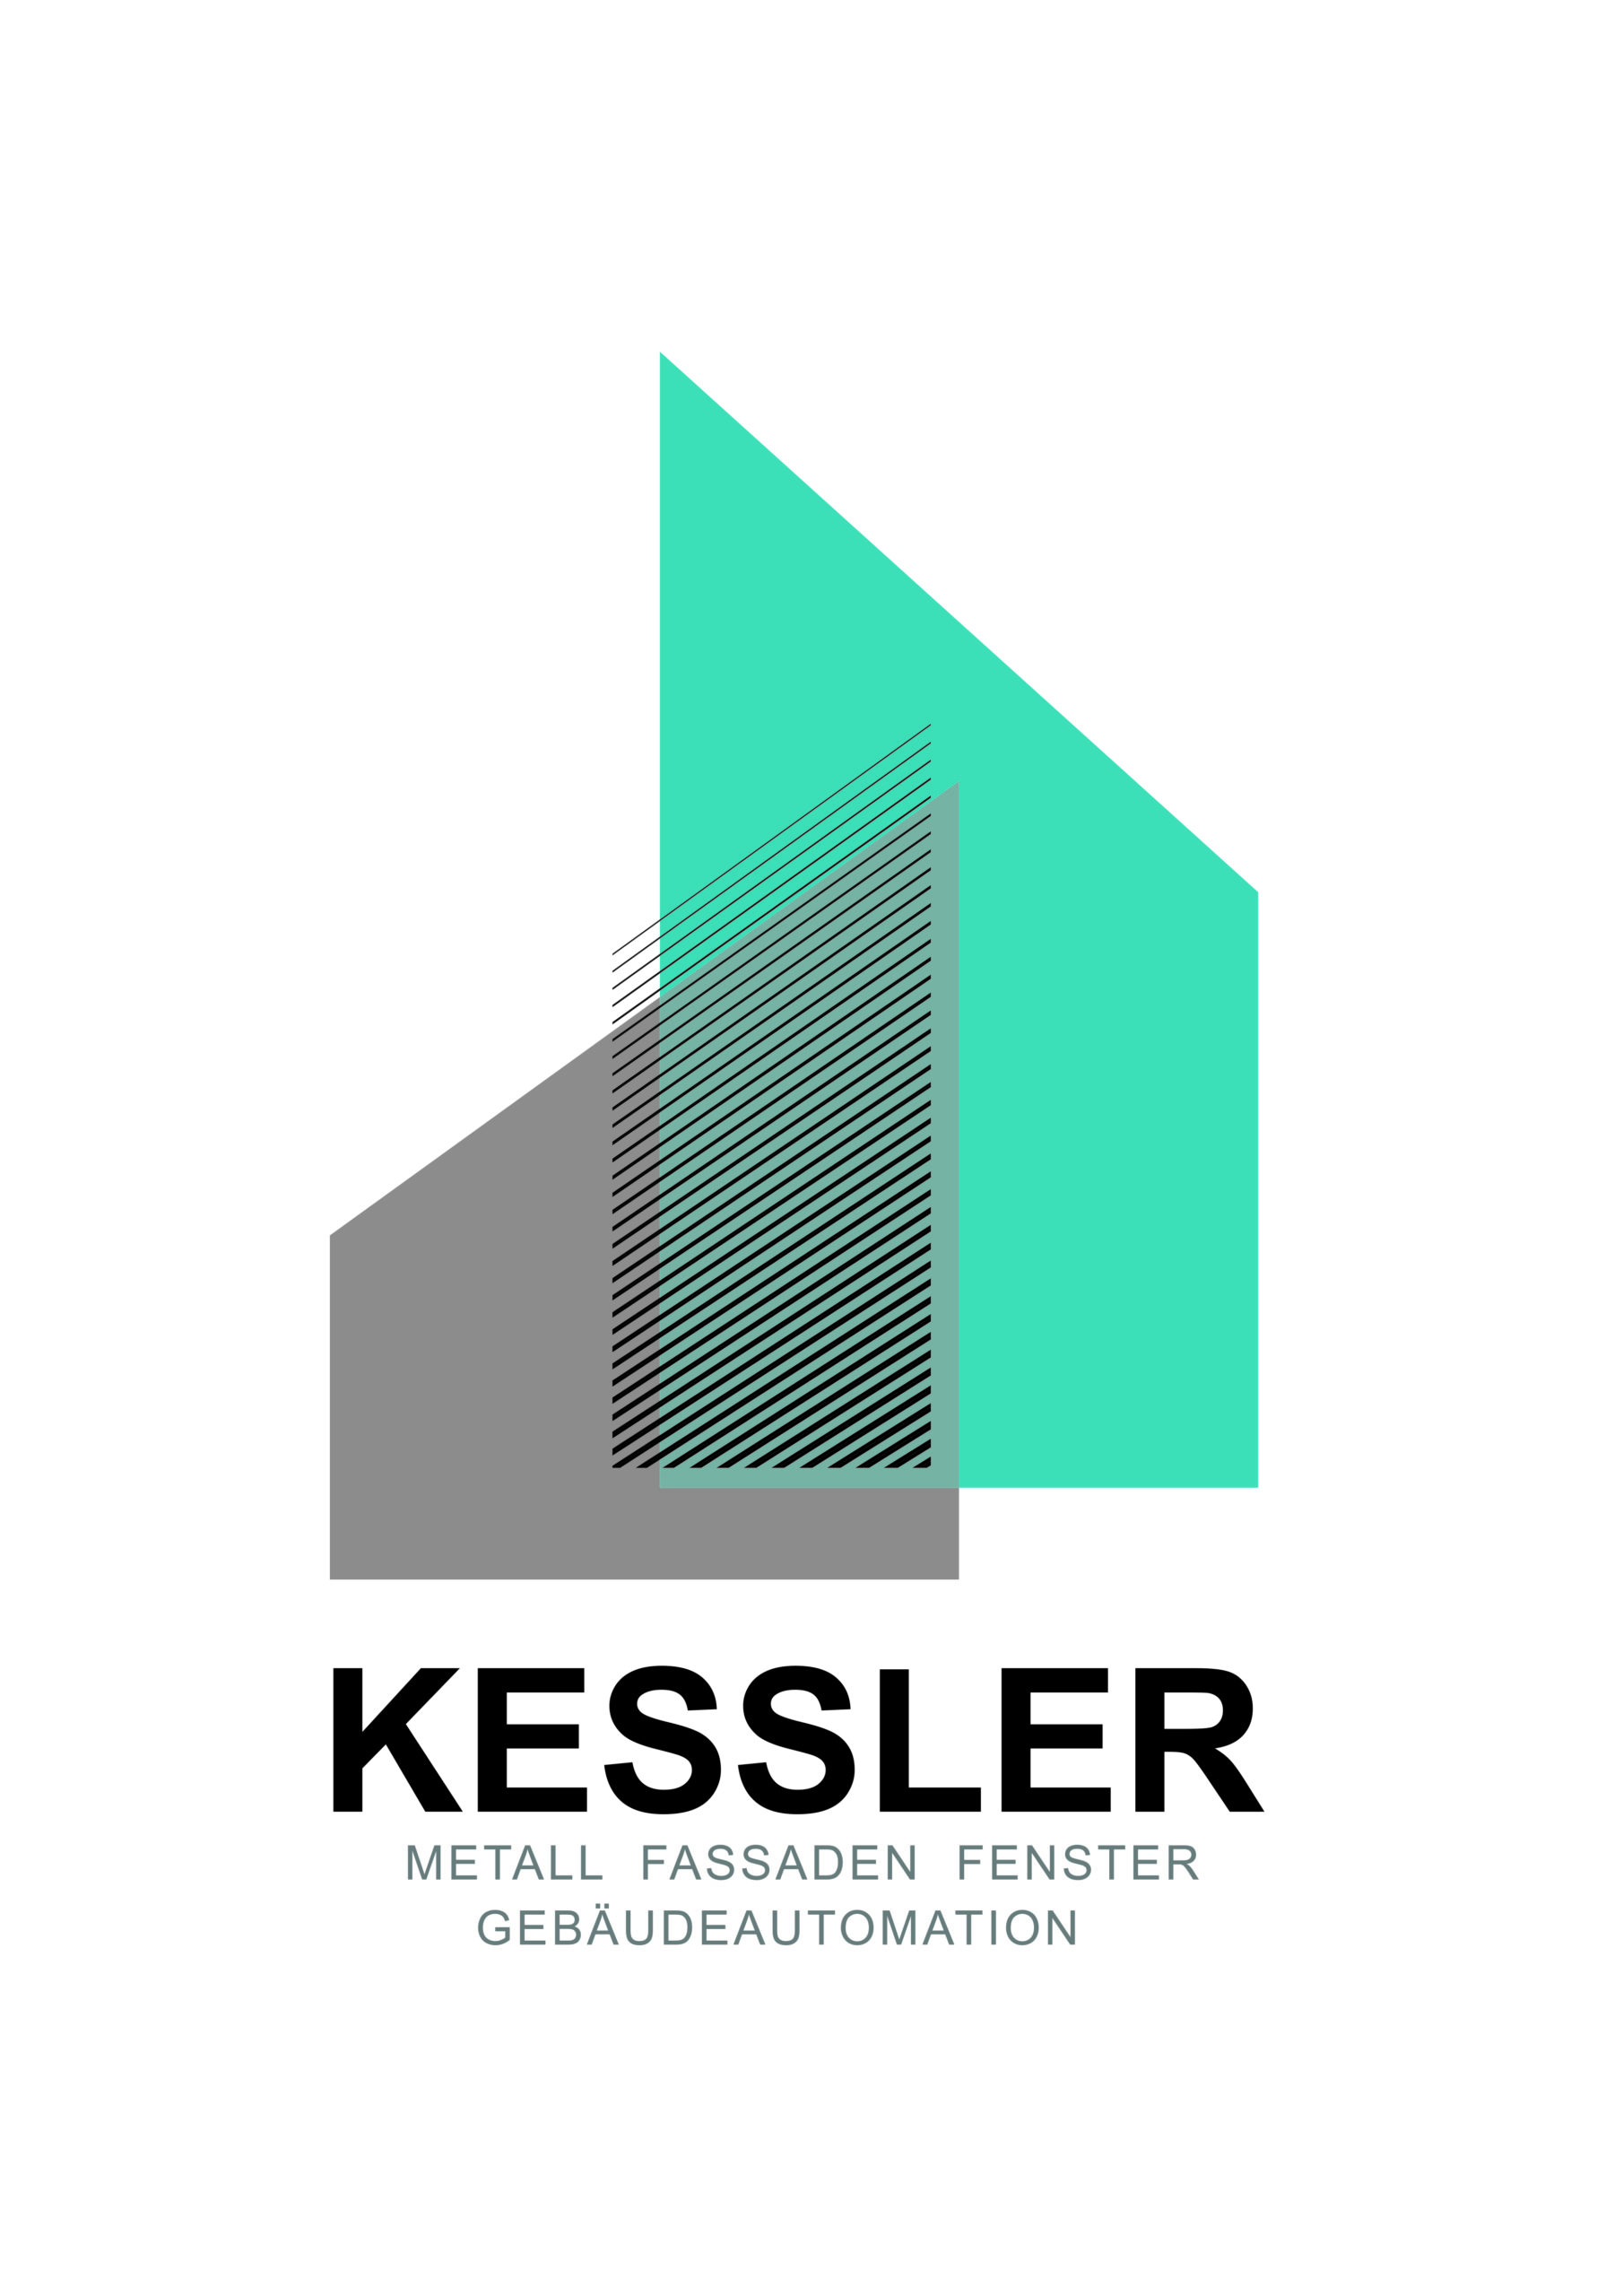 Metallbau Kessler GmbH & Co. KG